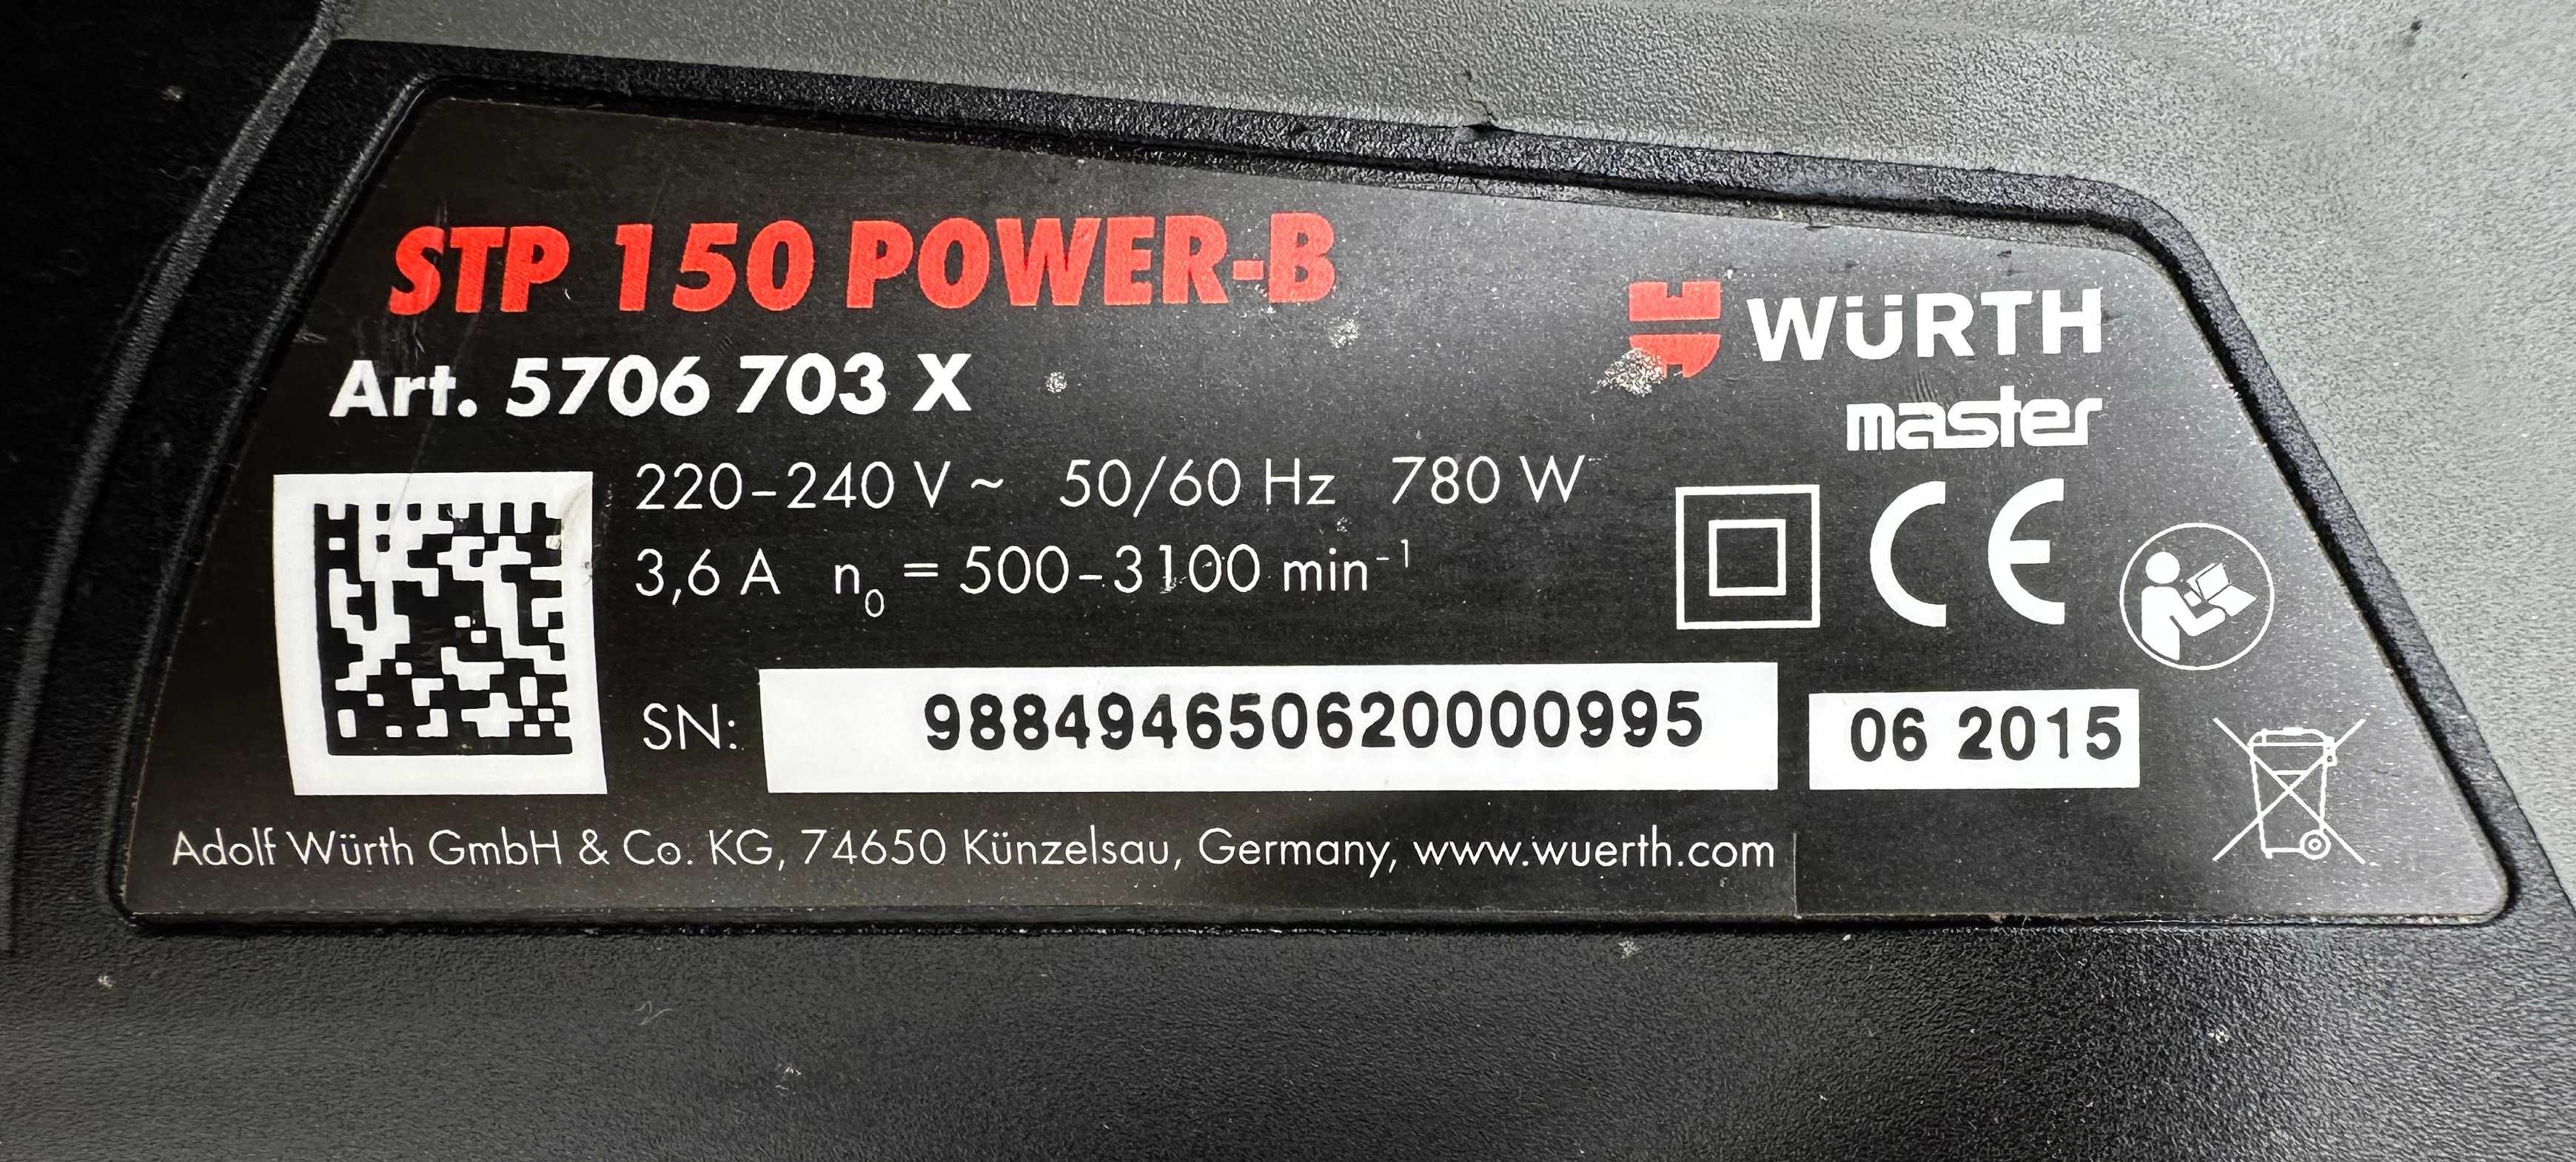 WURTH MASTER STP 150 POWER-B - Професионален прободен трион 780W